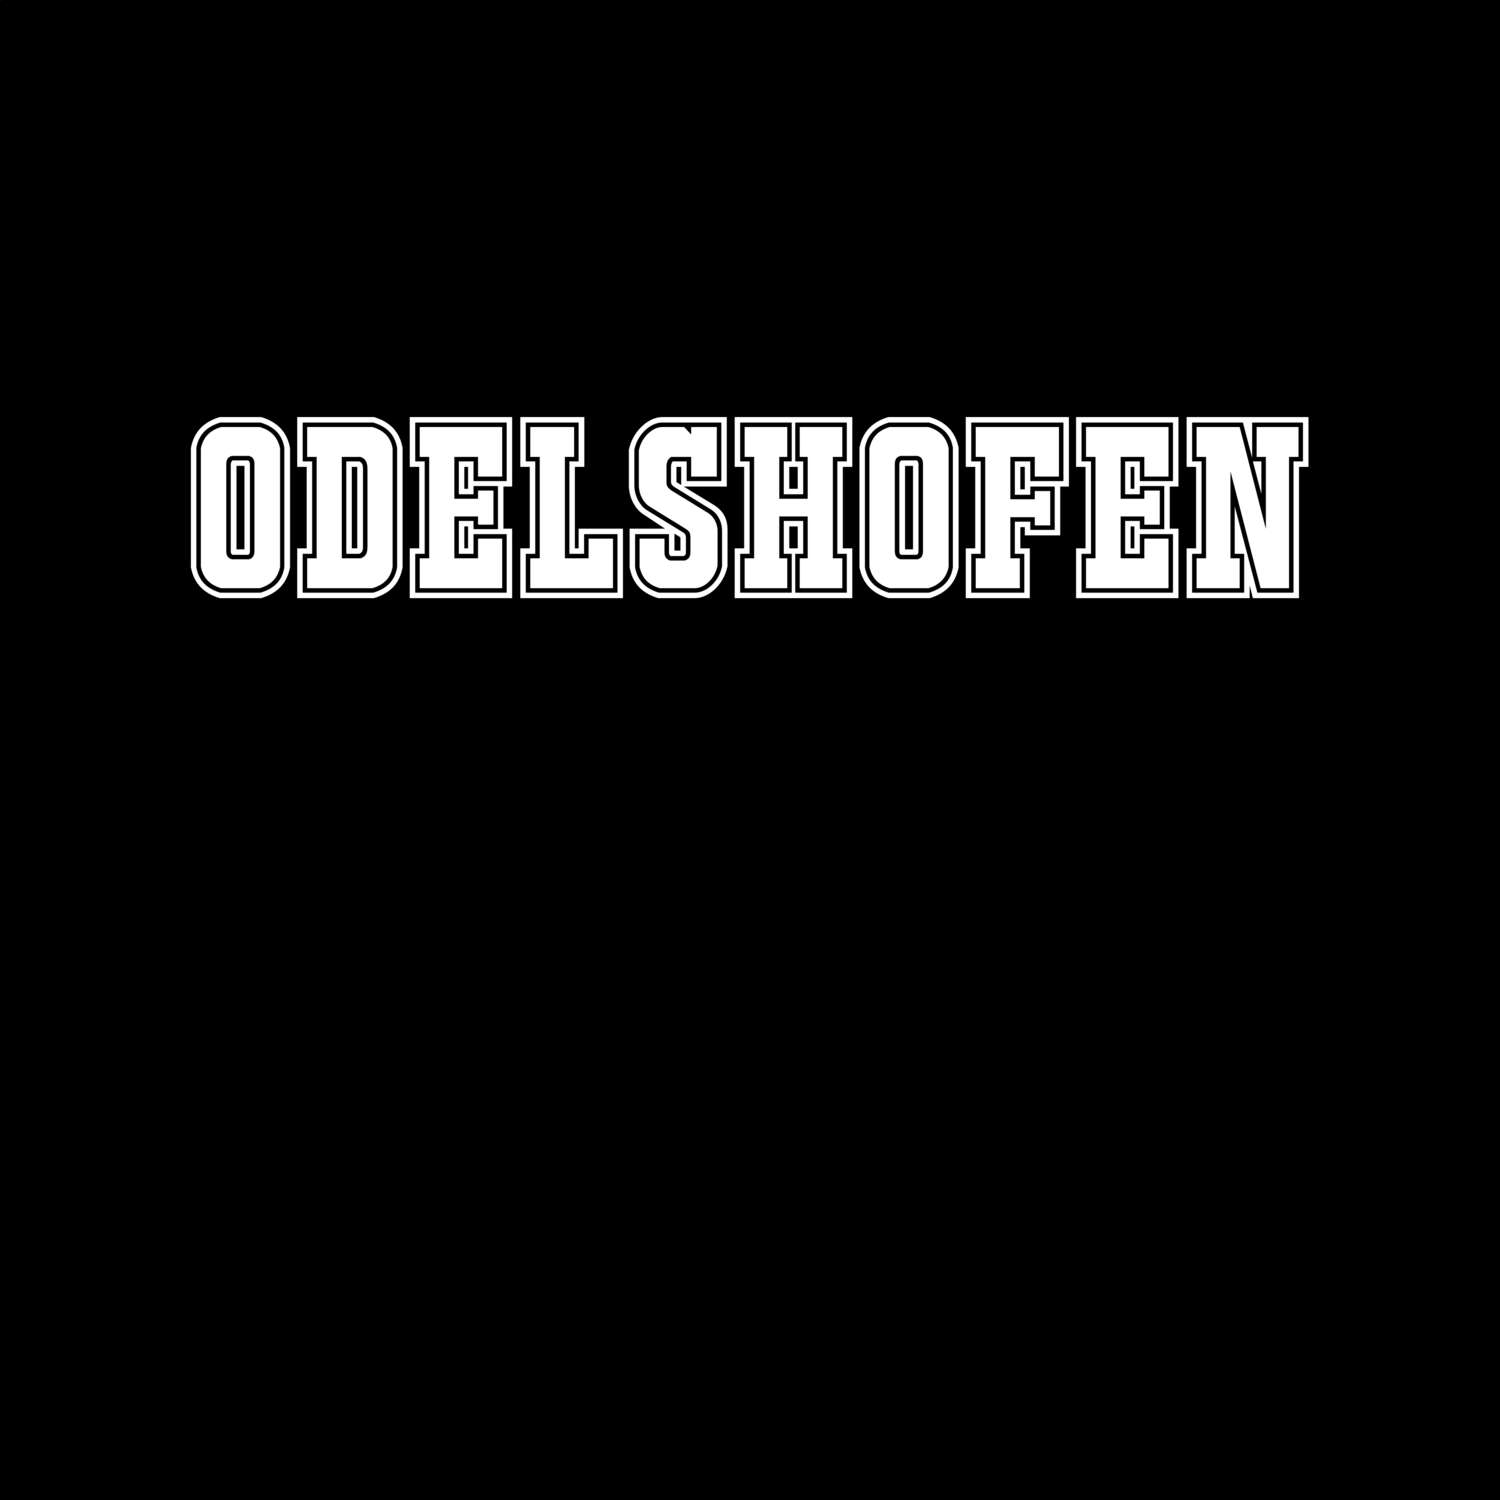 Odelshofen T-Shirt »Classic«